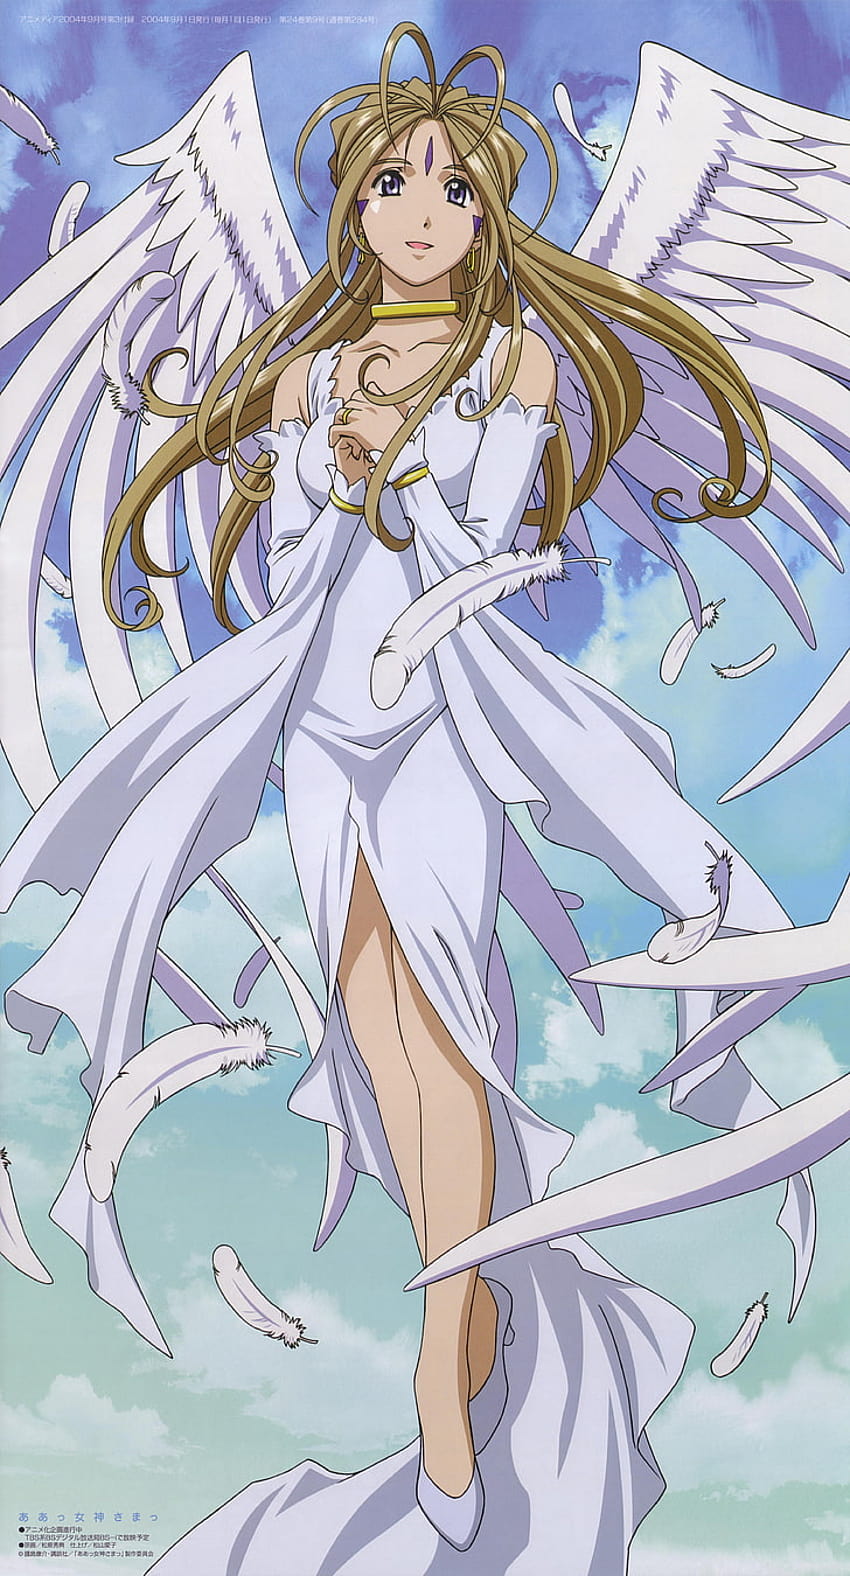 Lexica  Create a high resolution artwork of Anime Goddess in Heaven